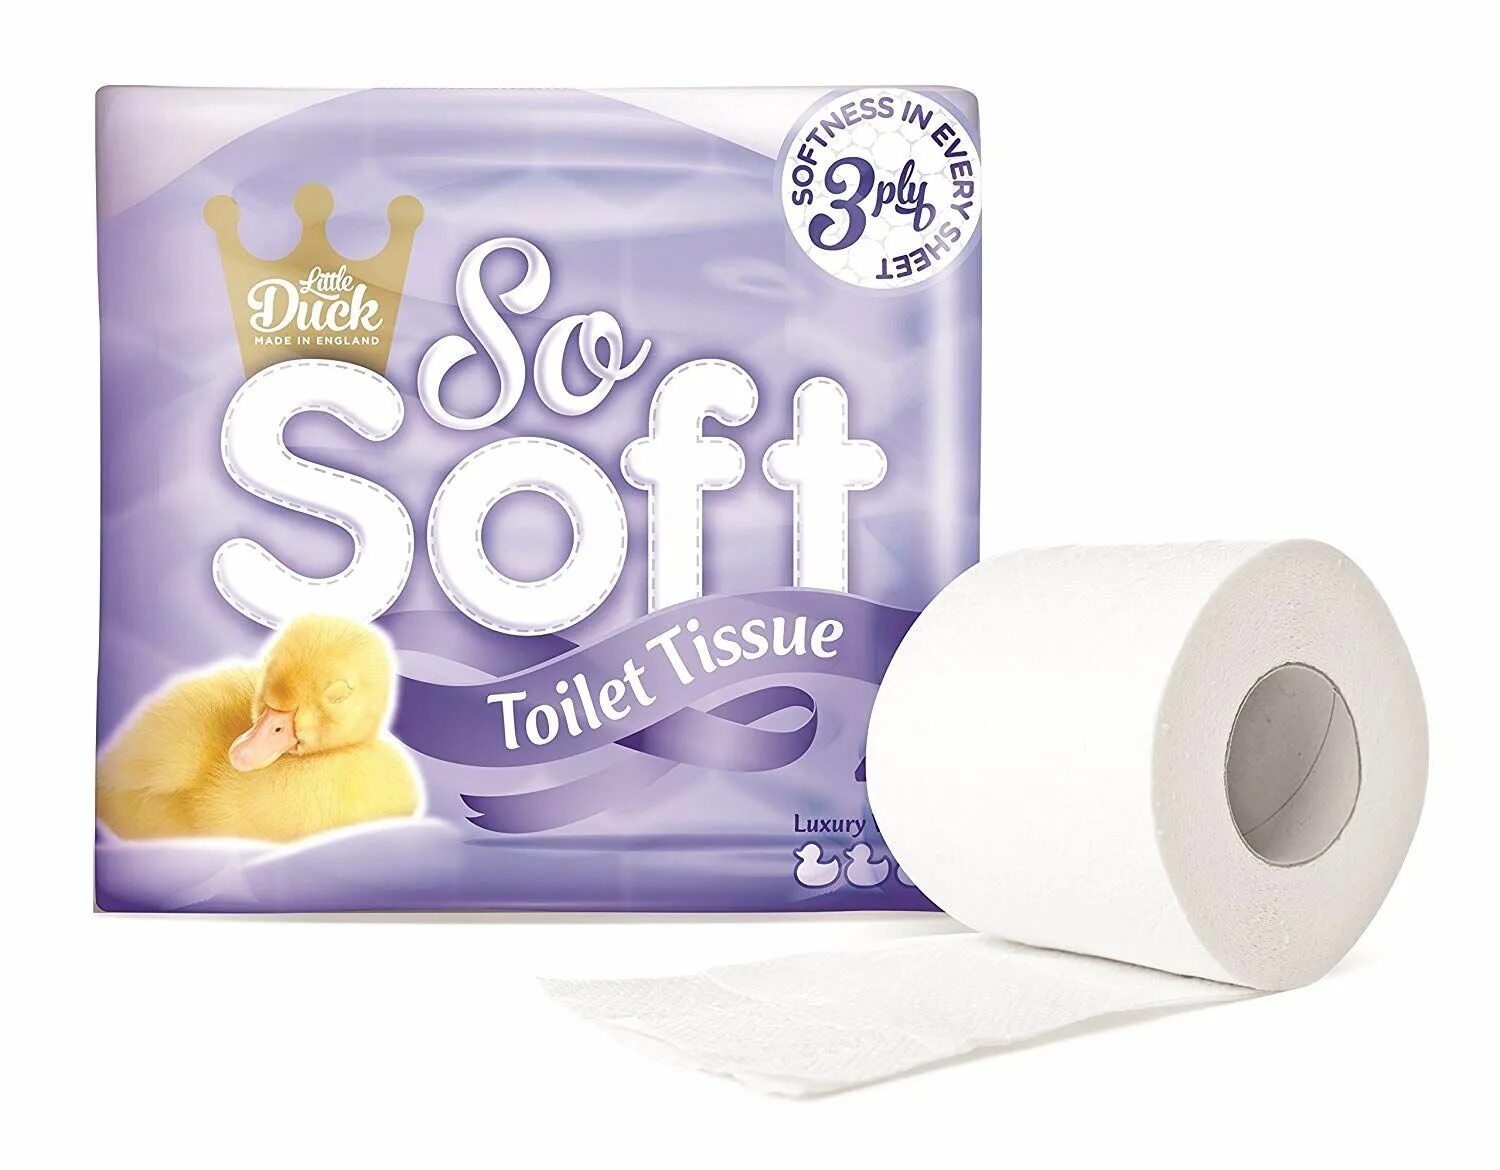 Упаковка туалетной бумаги. Туалетная бумага Soft. Дизайн туалетной бумаги. Туалетная бумага дизайн упаковки. Туалетная бумага упак